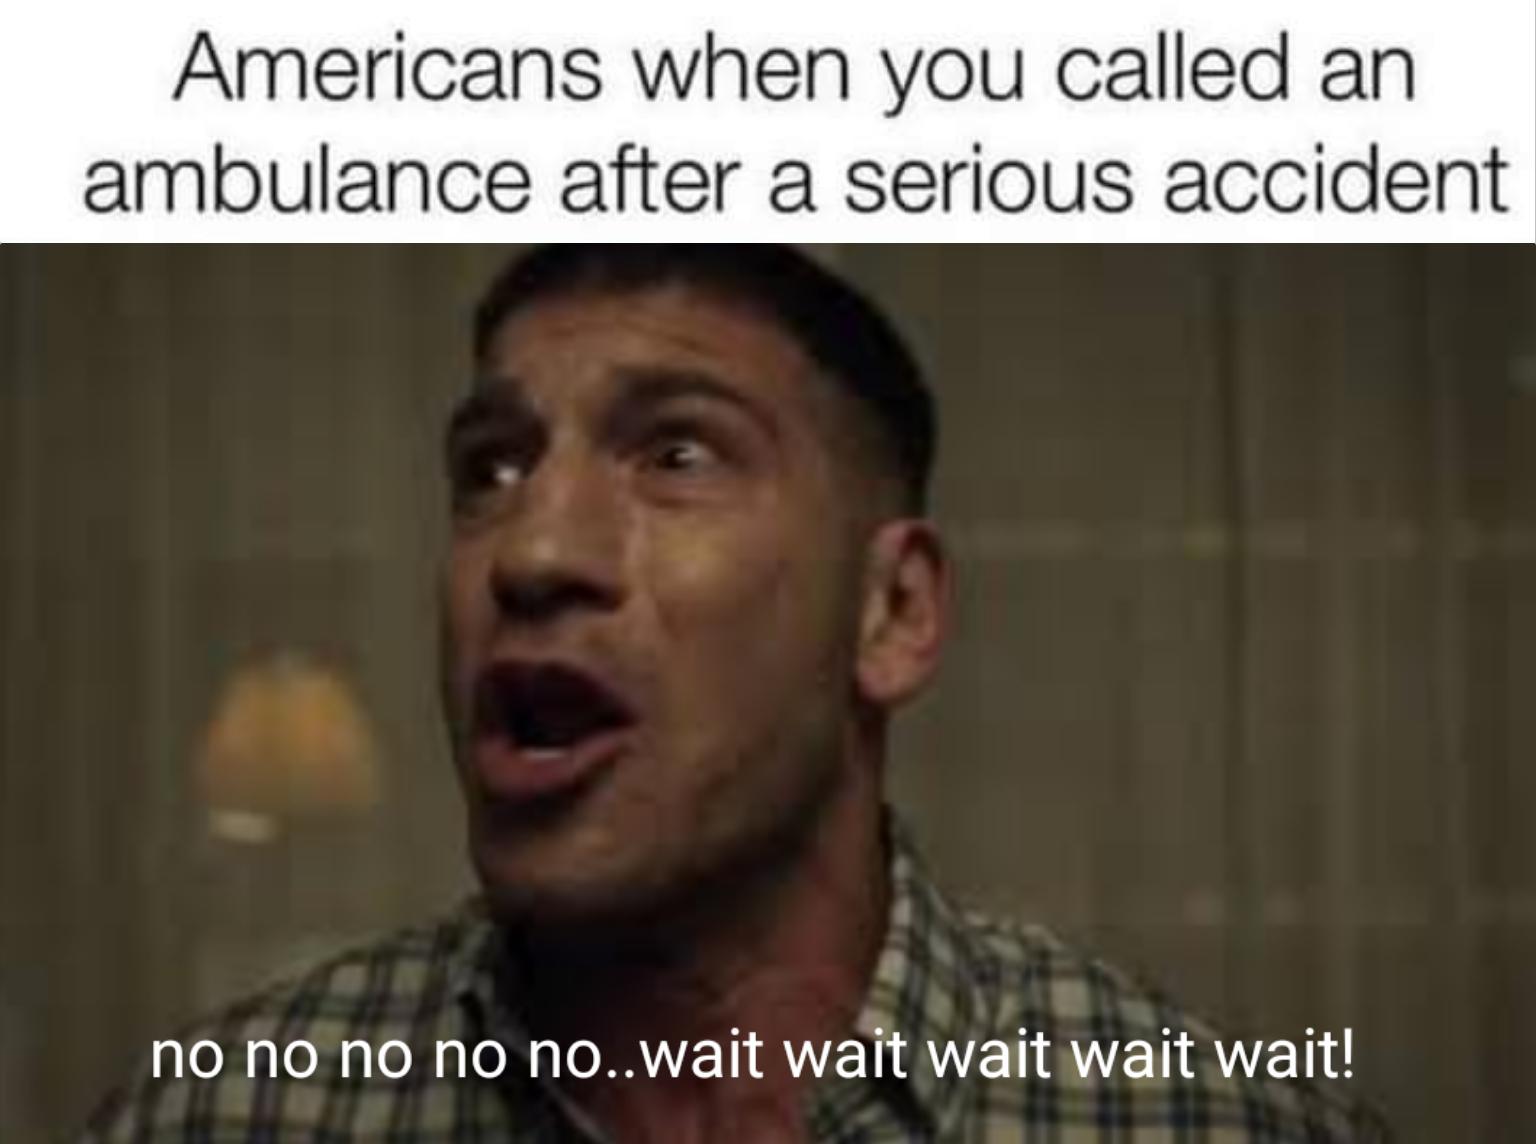 funny memes - dank memes - no no no no meme - Americans when you called an ambulance after a serious accident no no no no no..wait wait wait wait wait!